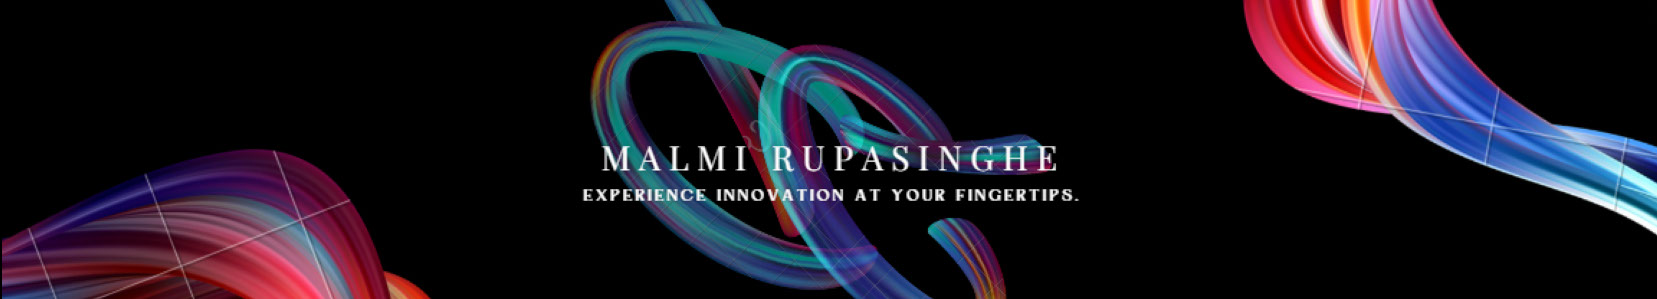 Banner de perfil de Malmi Rupasinghe